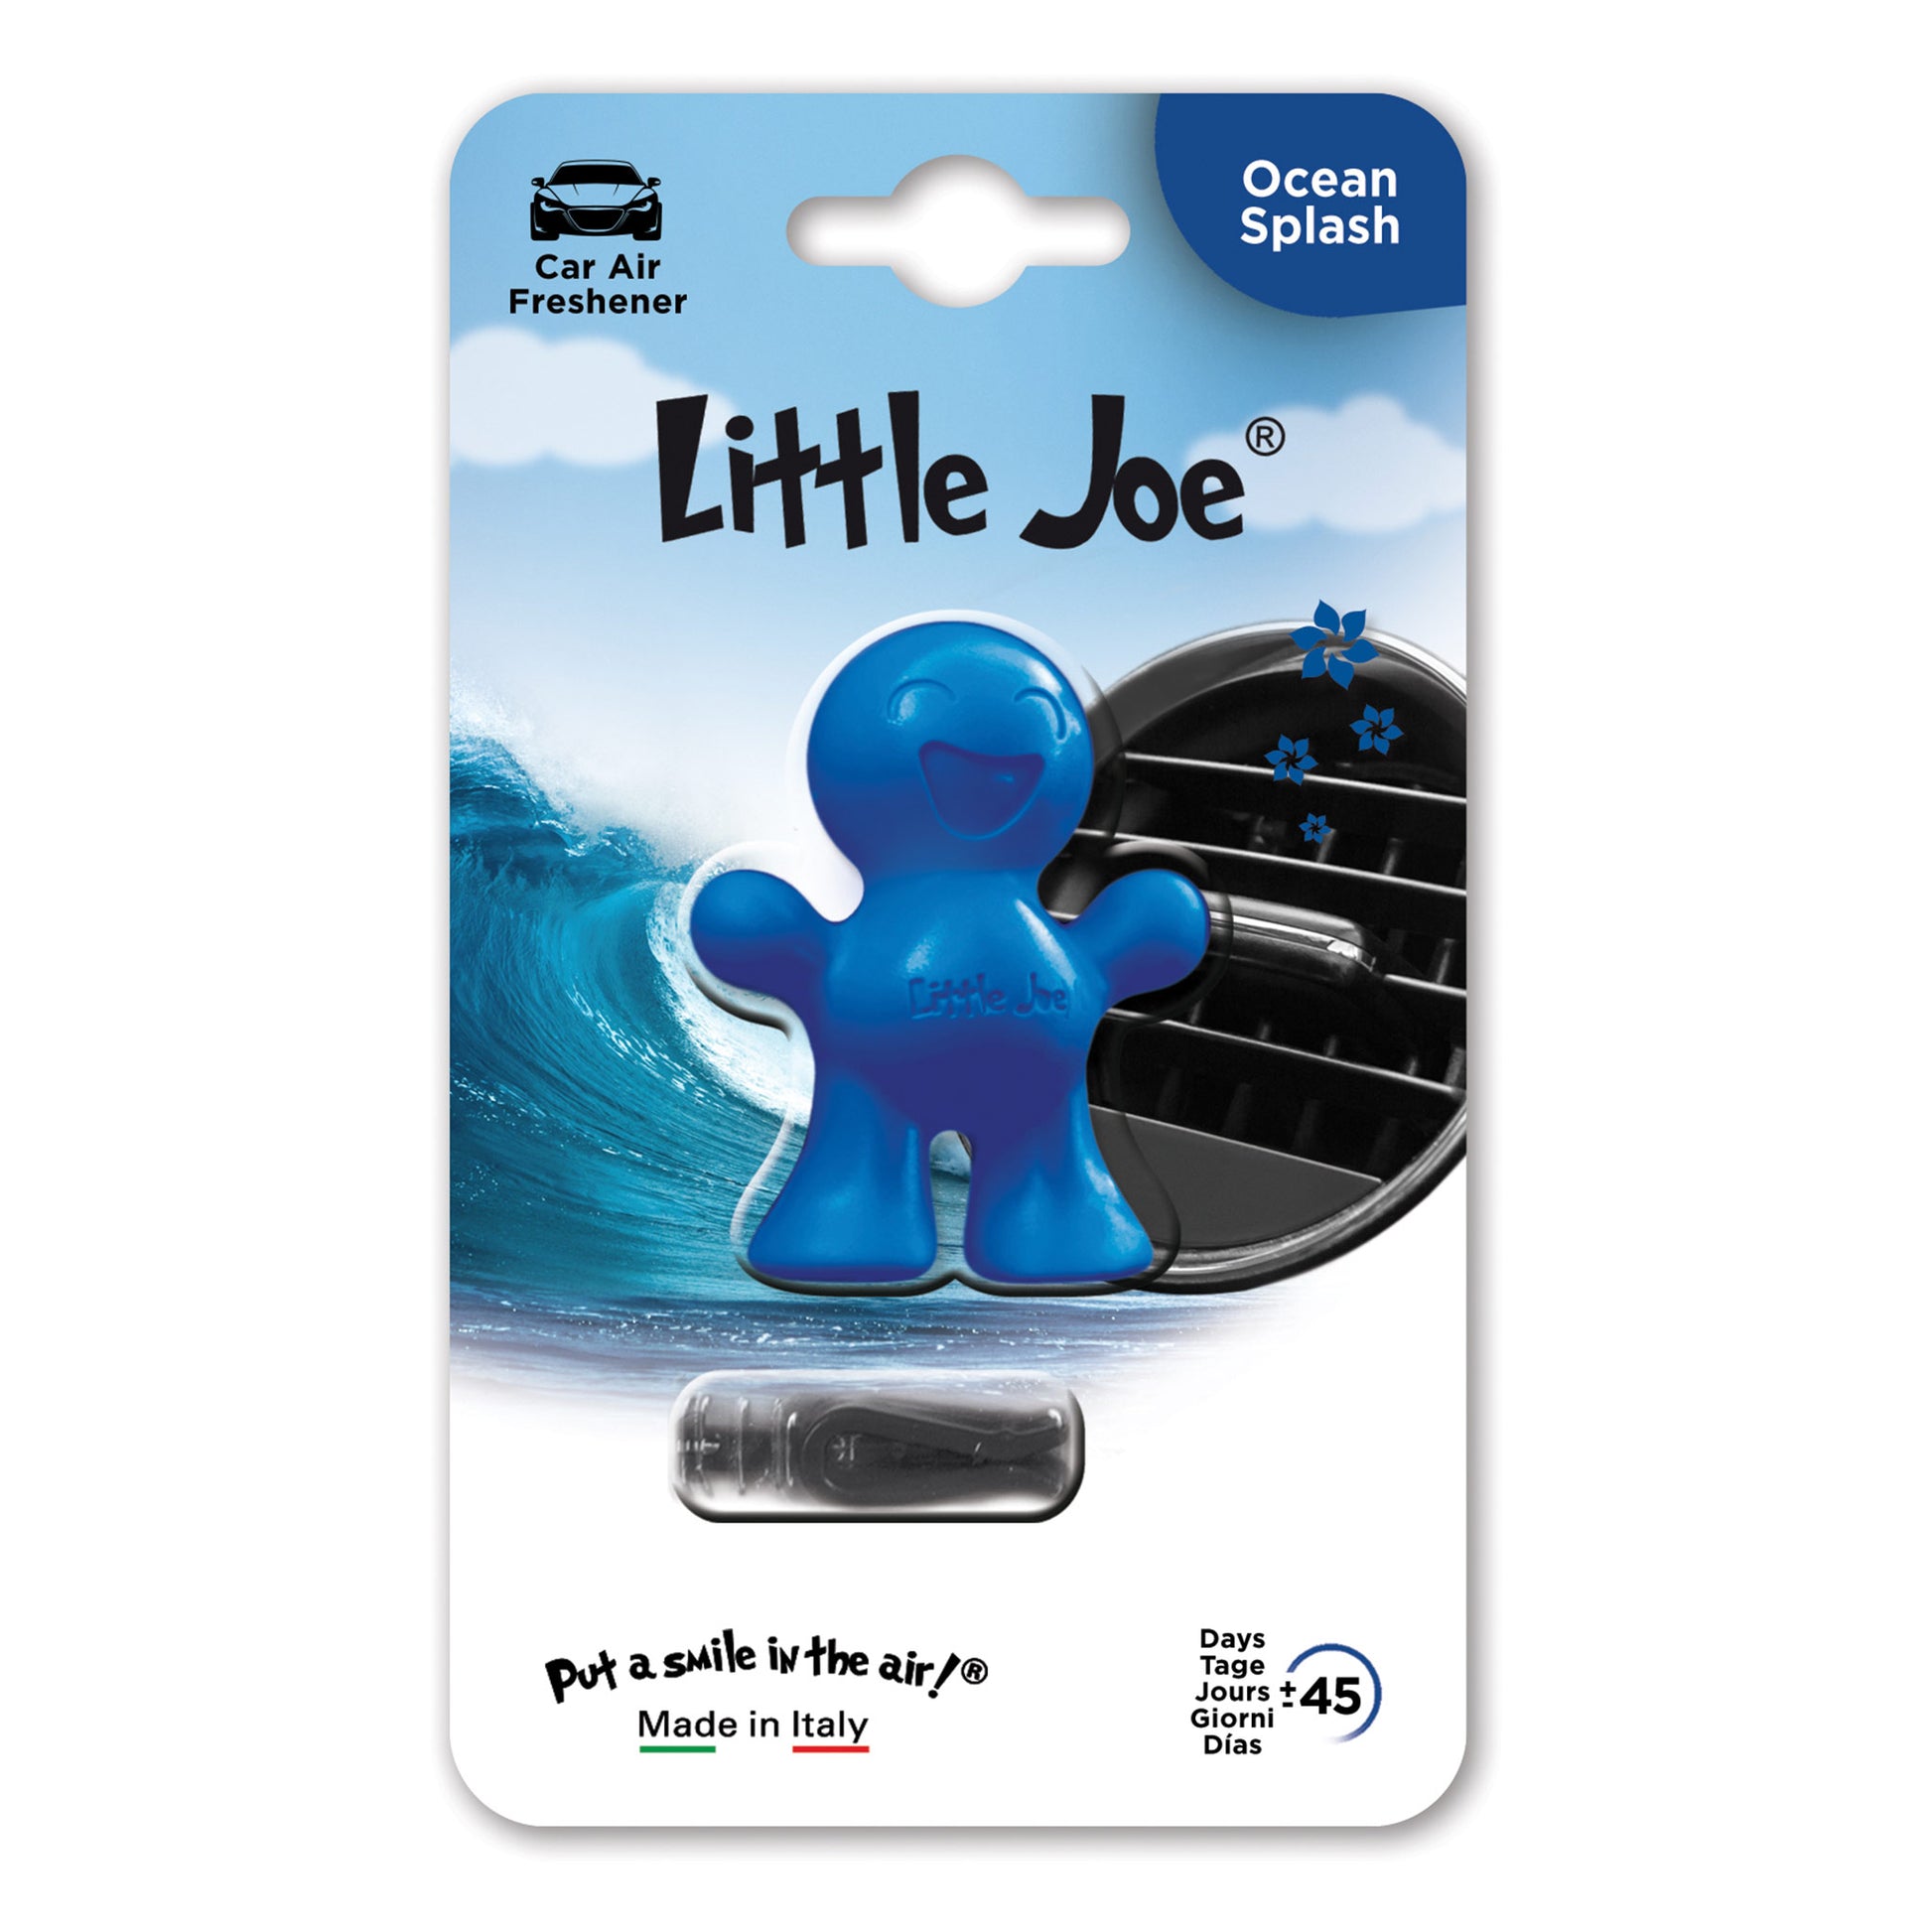 Désodorisant voiture Little Joe 3D Vanille - Auto5